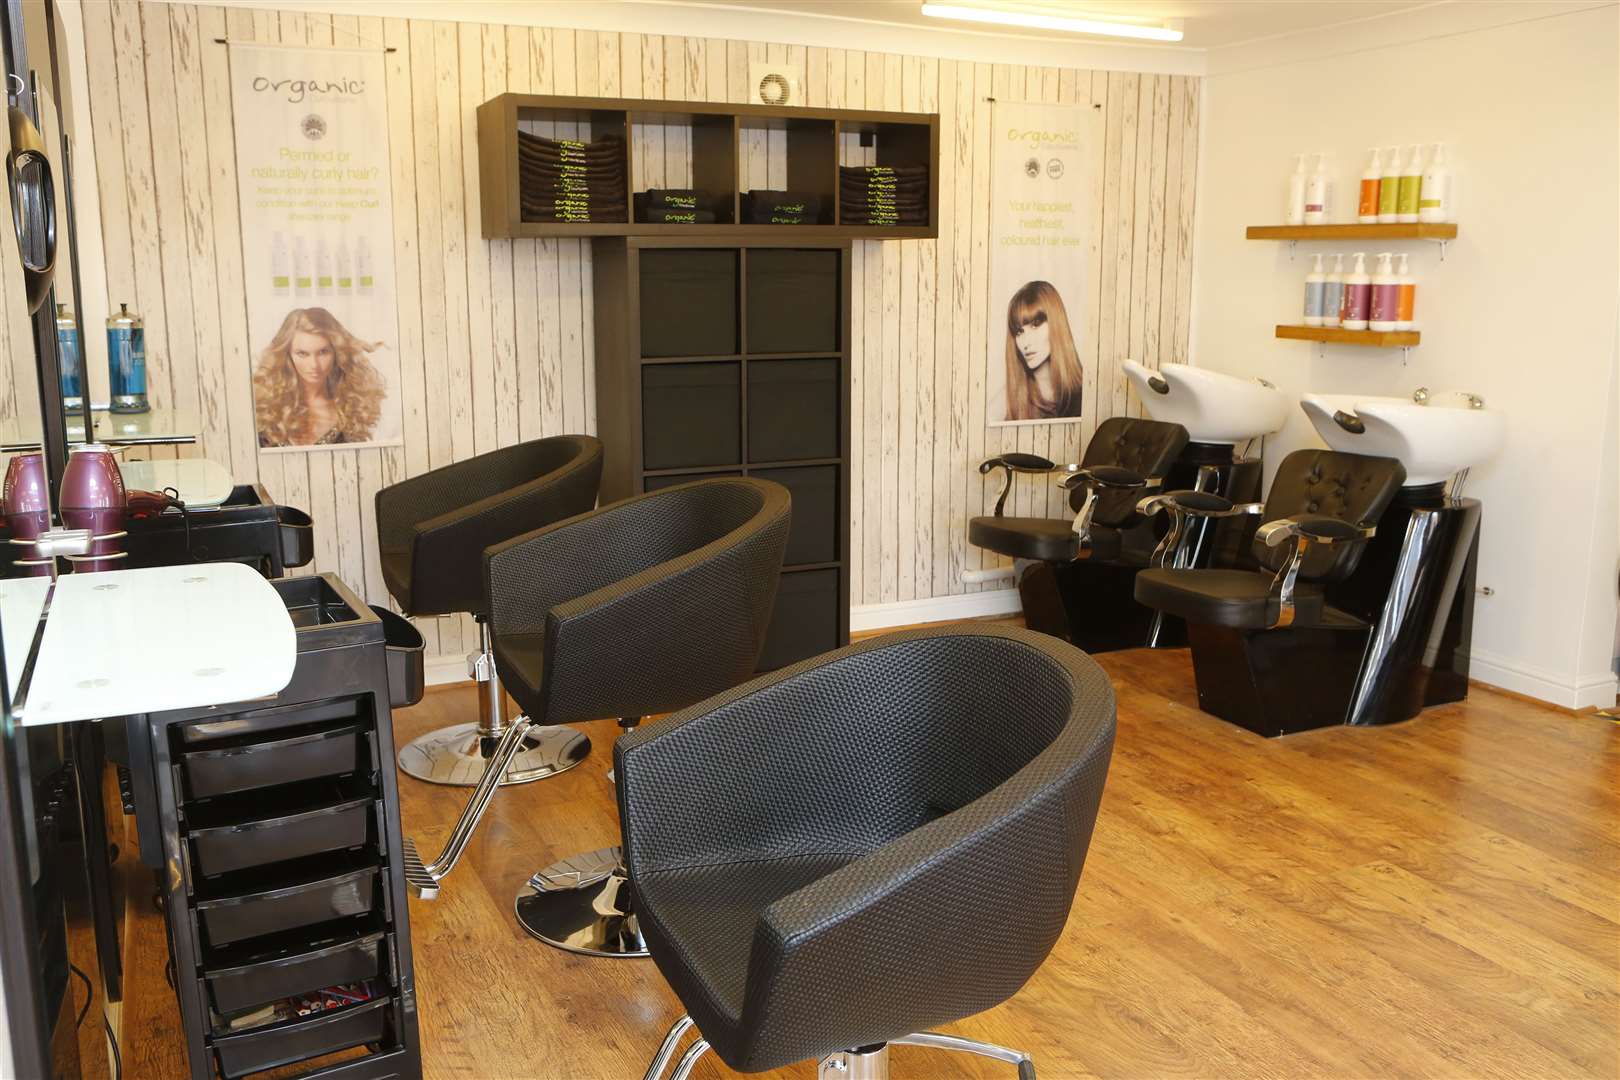 Inside the salon. Picture: Andy Jones